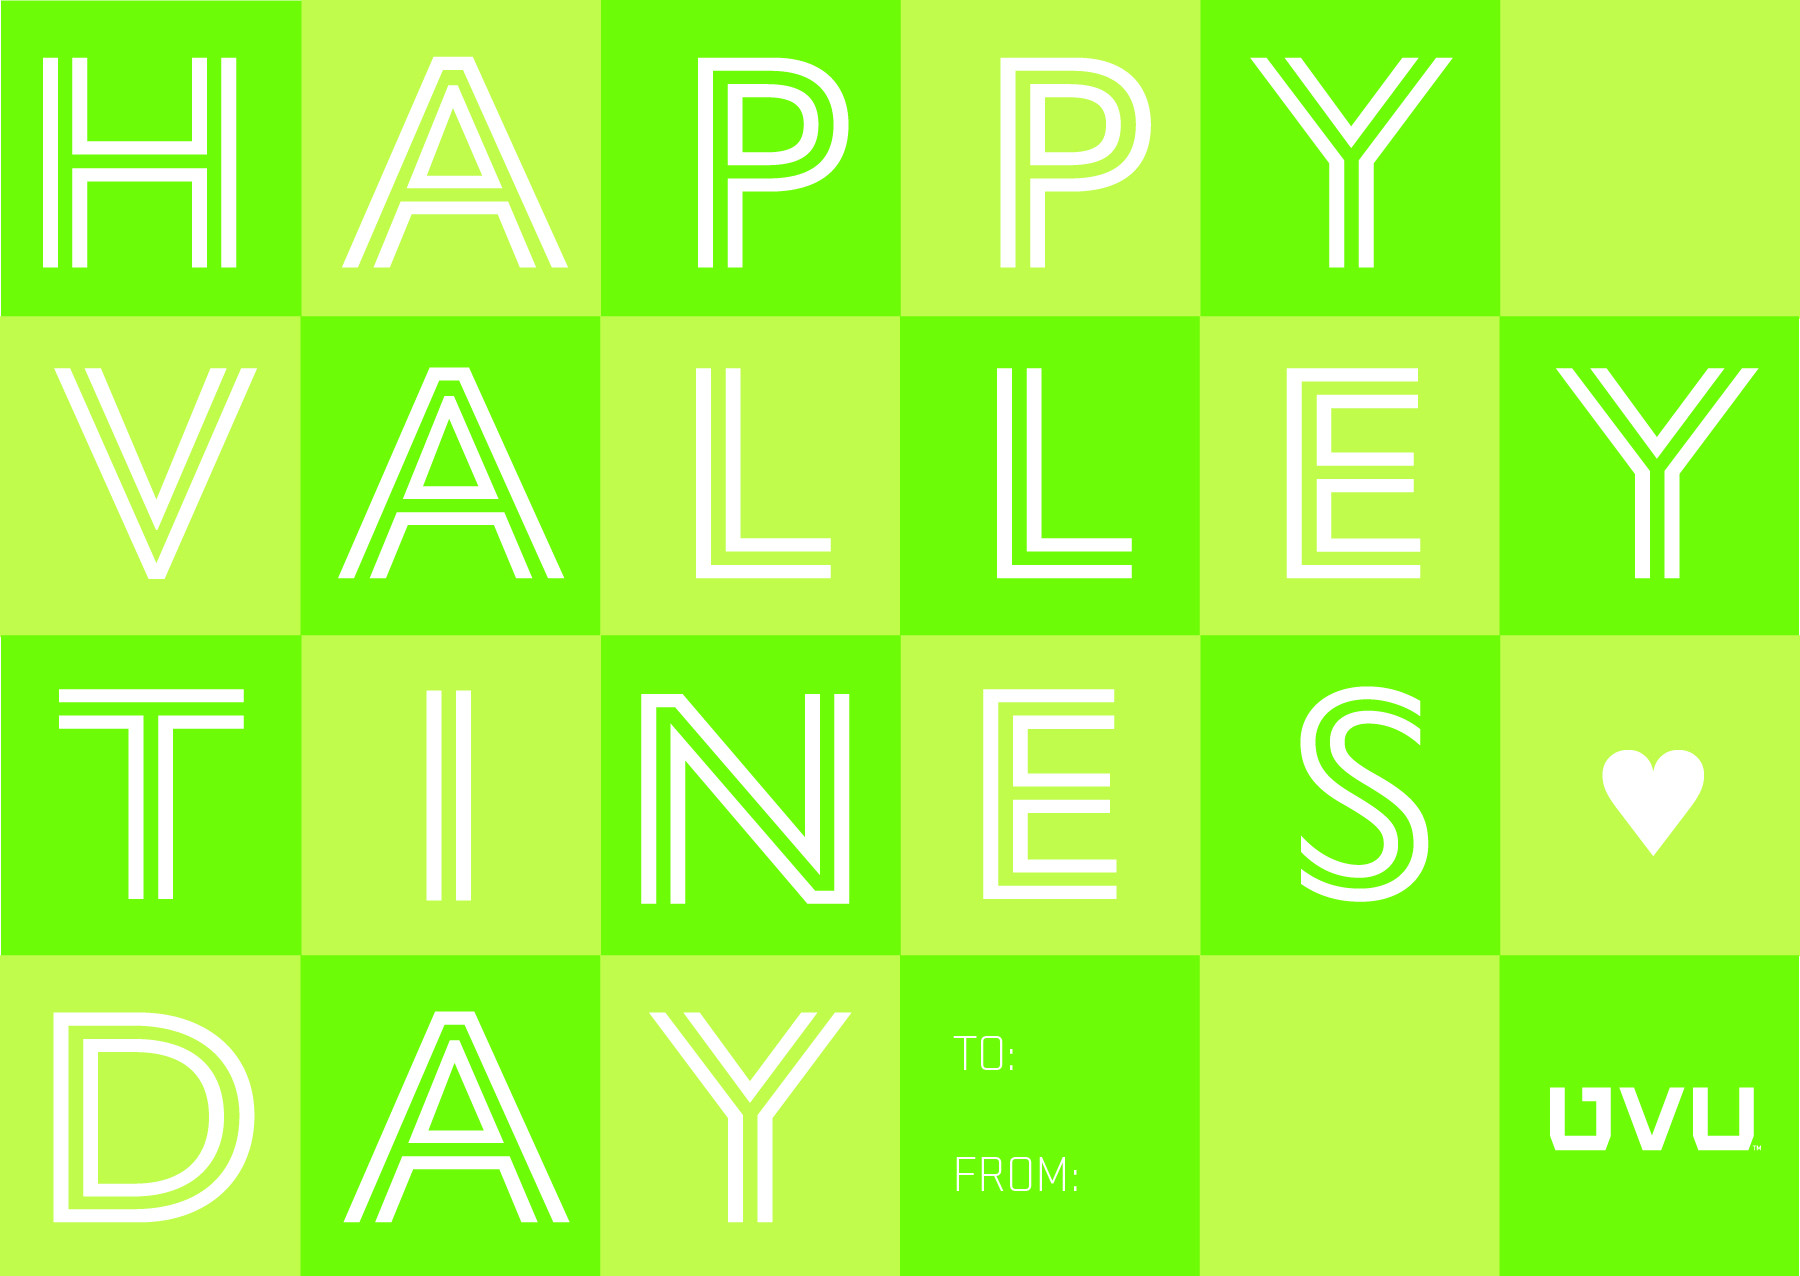 "Happy Valleytines Day" postcard